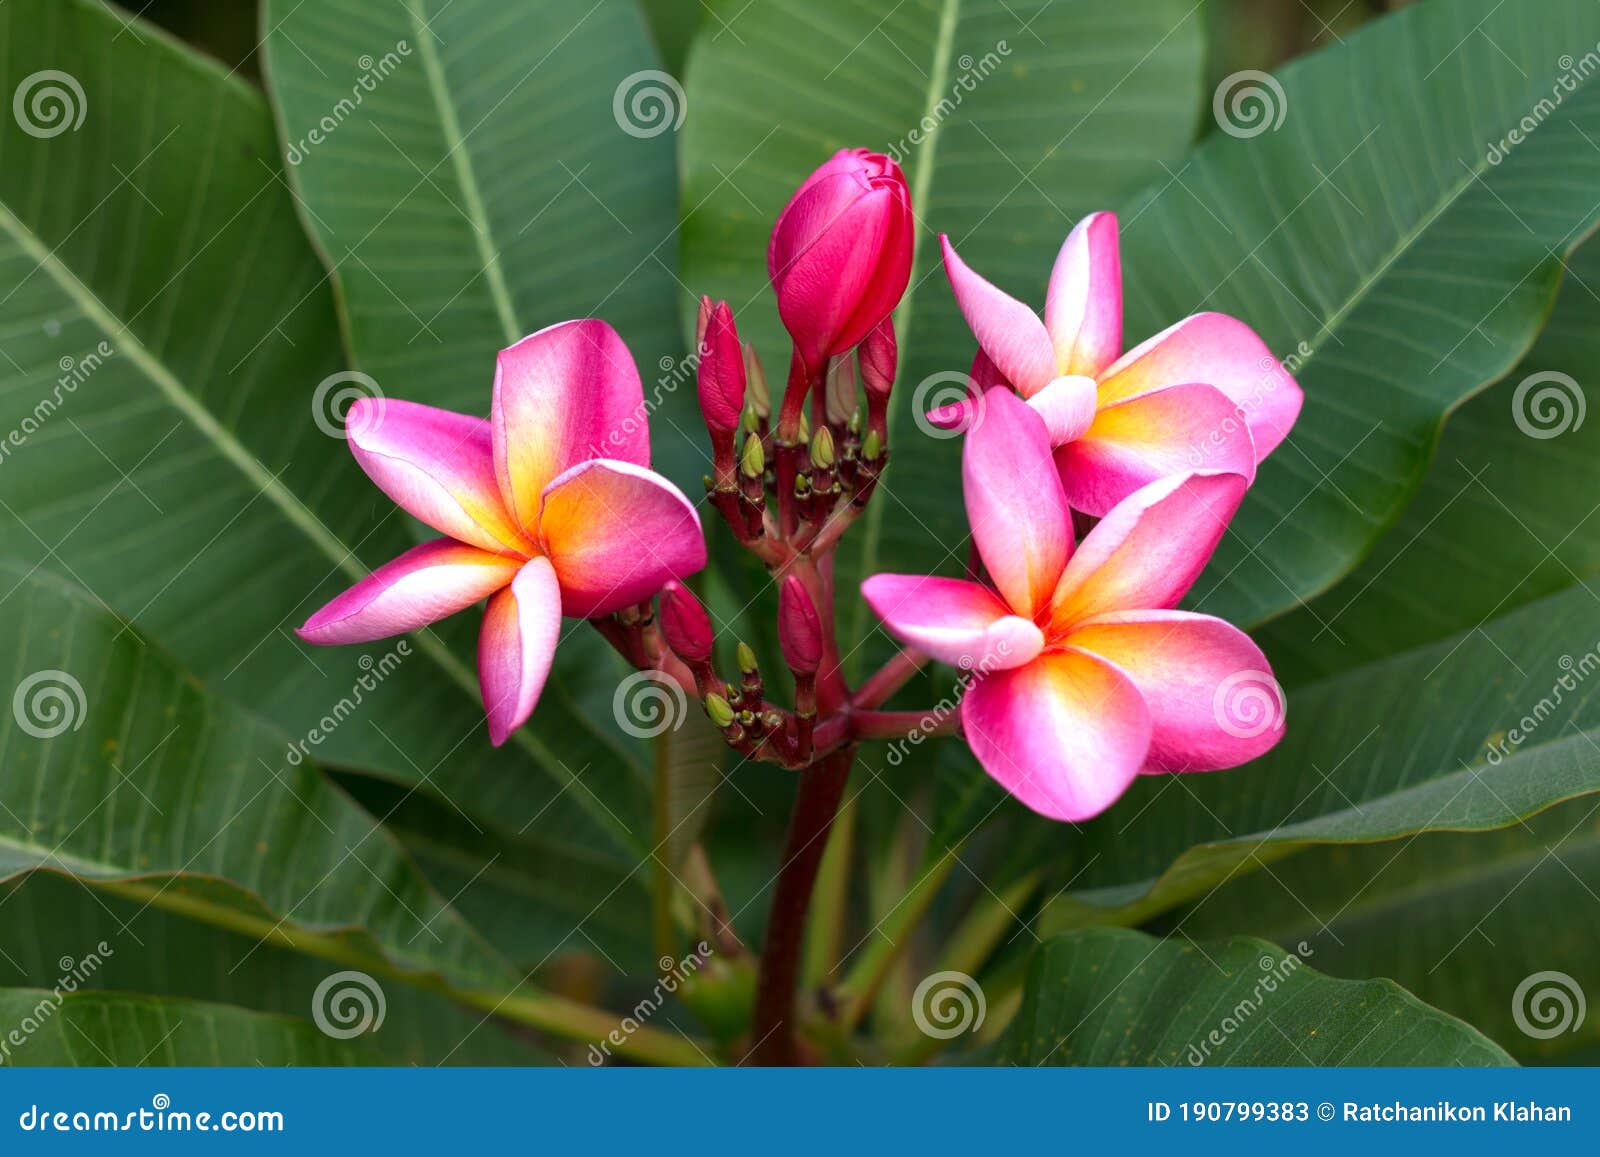 frangipani tropical spa flower. plumeria flower on plant